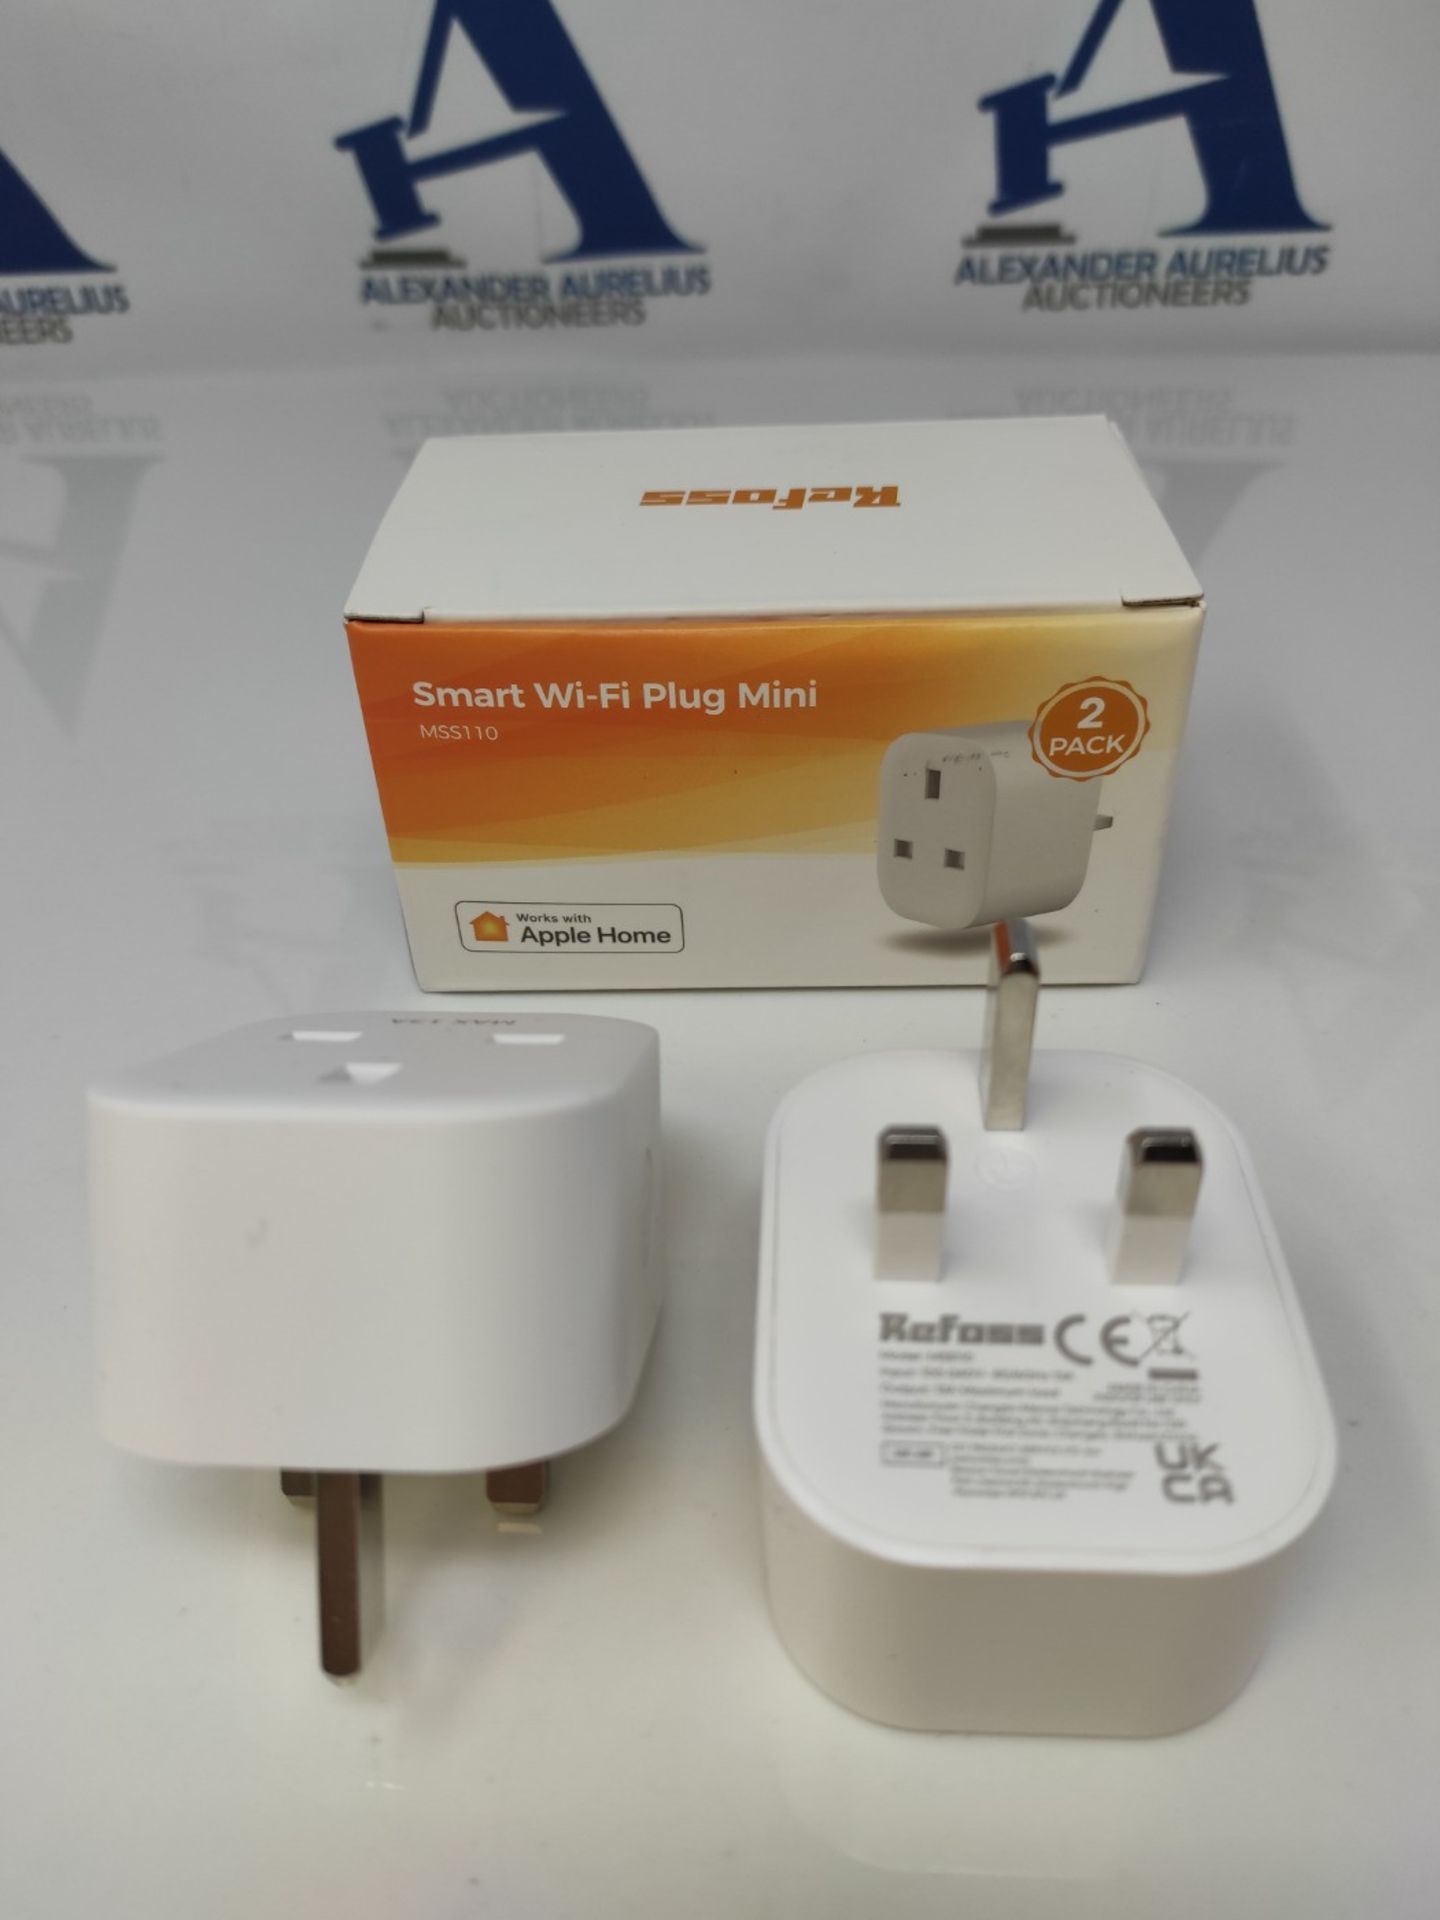 Smart Plug Works with Alexa, Apple HomeKit Siri, Google Home - Refoss Wifi Plug Alexa - Image 2 of 2